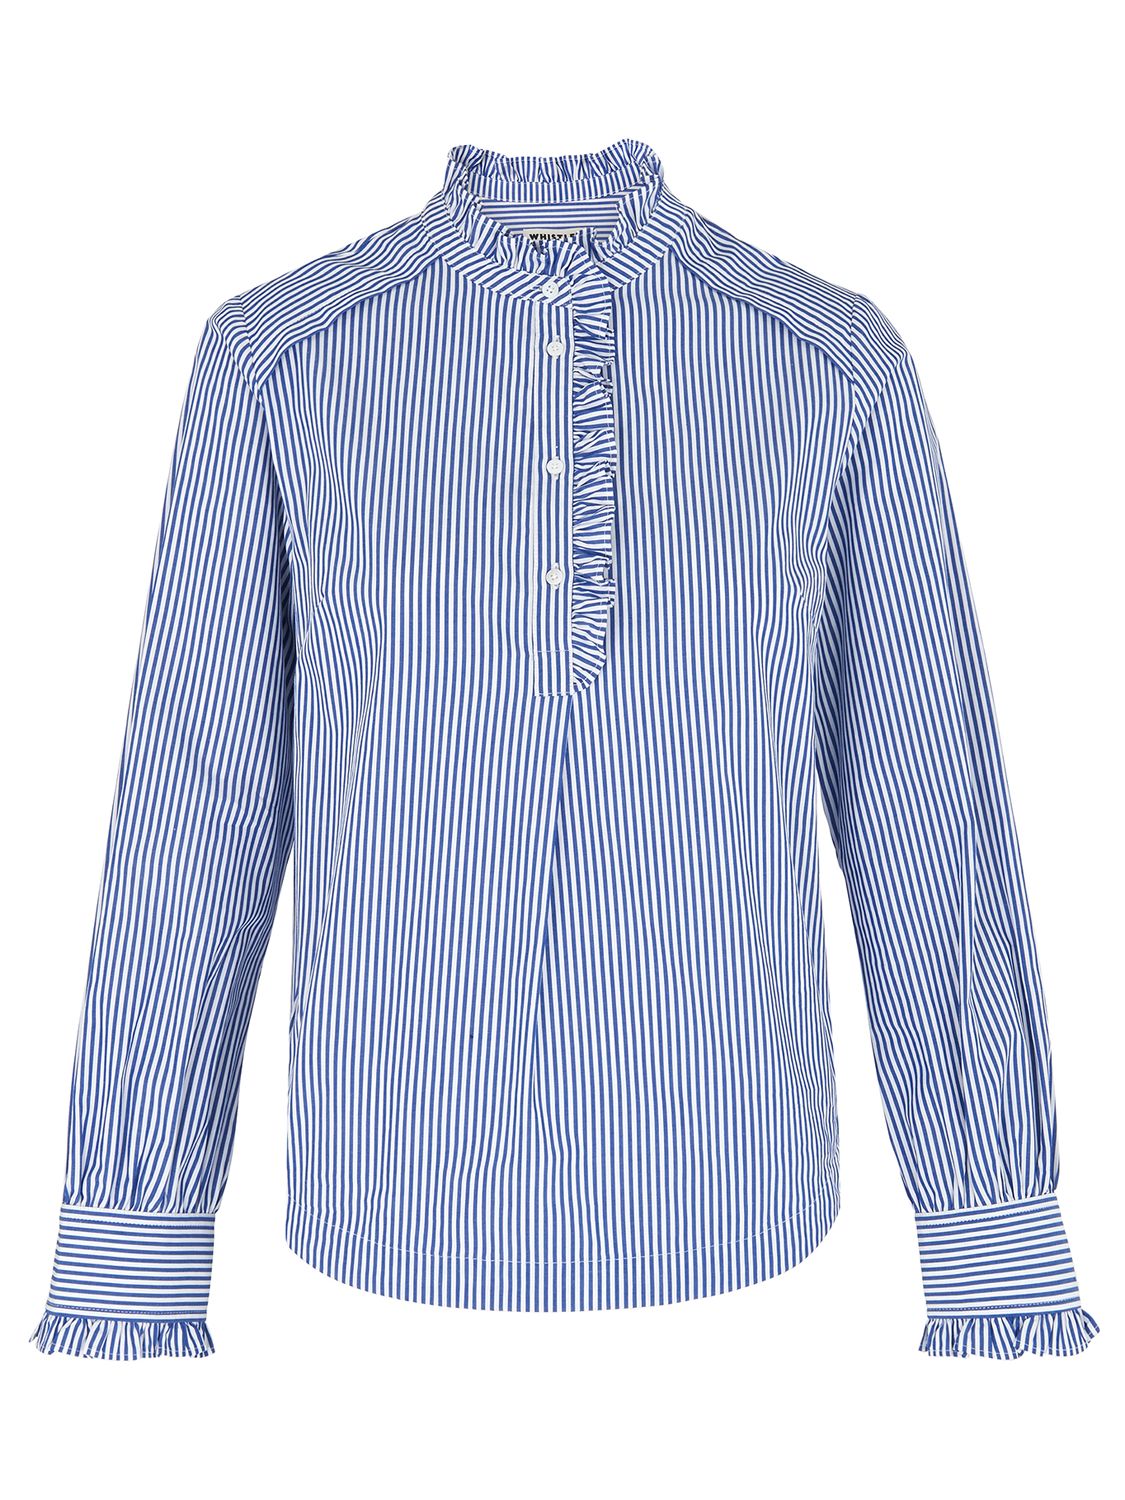 Whistles Ruffle Detail Stripe Shirt, Blue/White